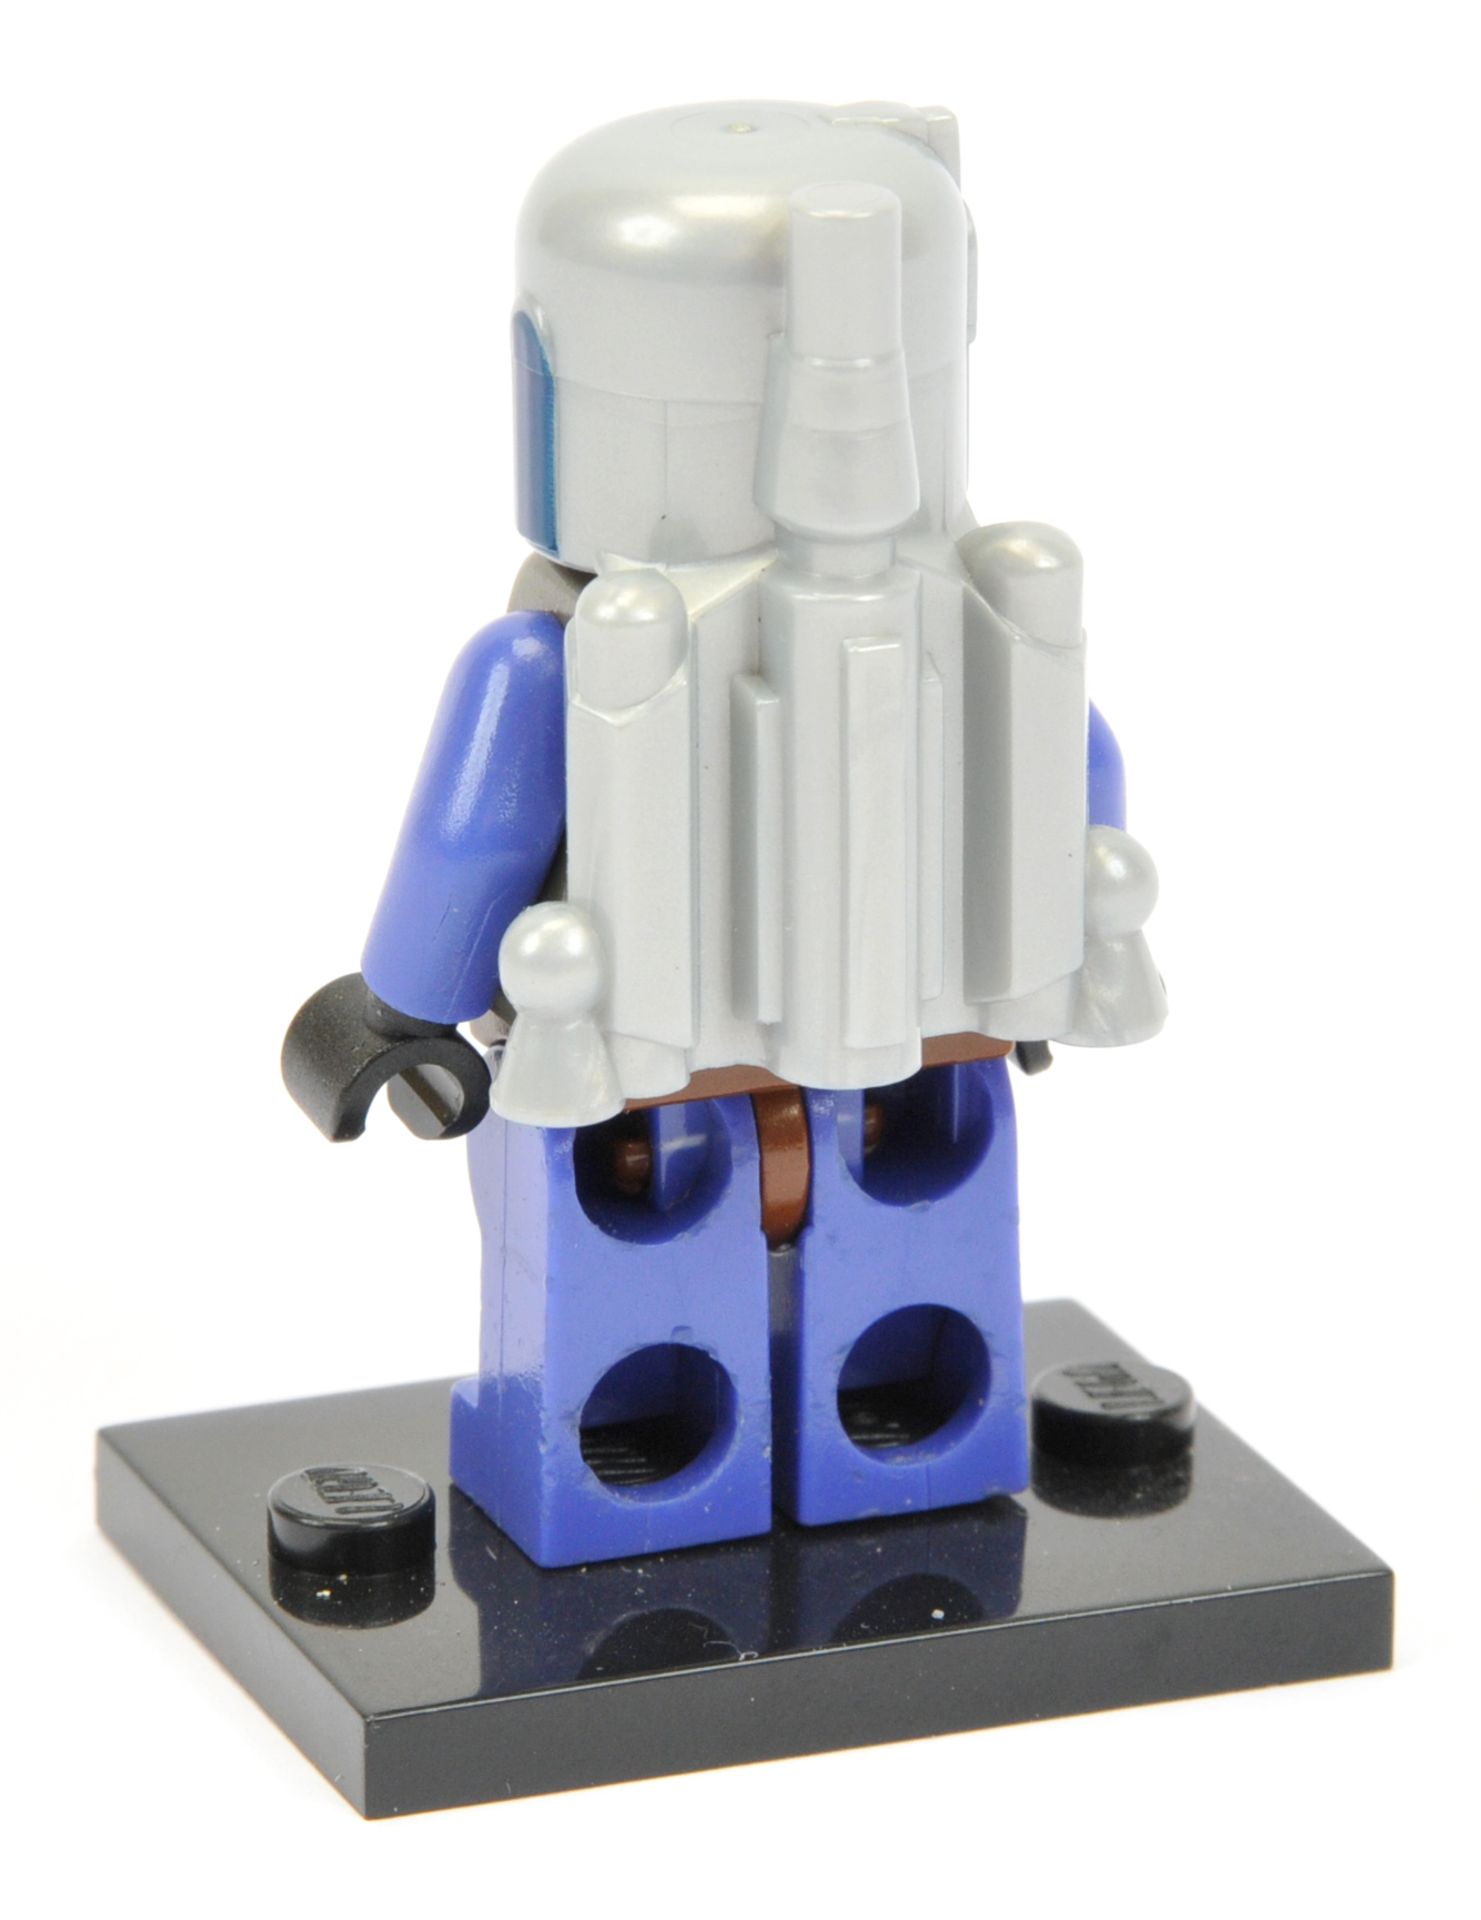 Lego Star Wars Minifigure Jango Fett - from Set 7153 Jango Fett's Slave 1 (2002), Rare Figure Nea... - Image 2 of 2